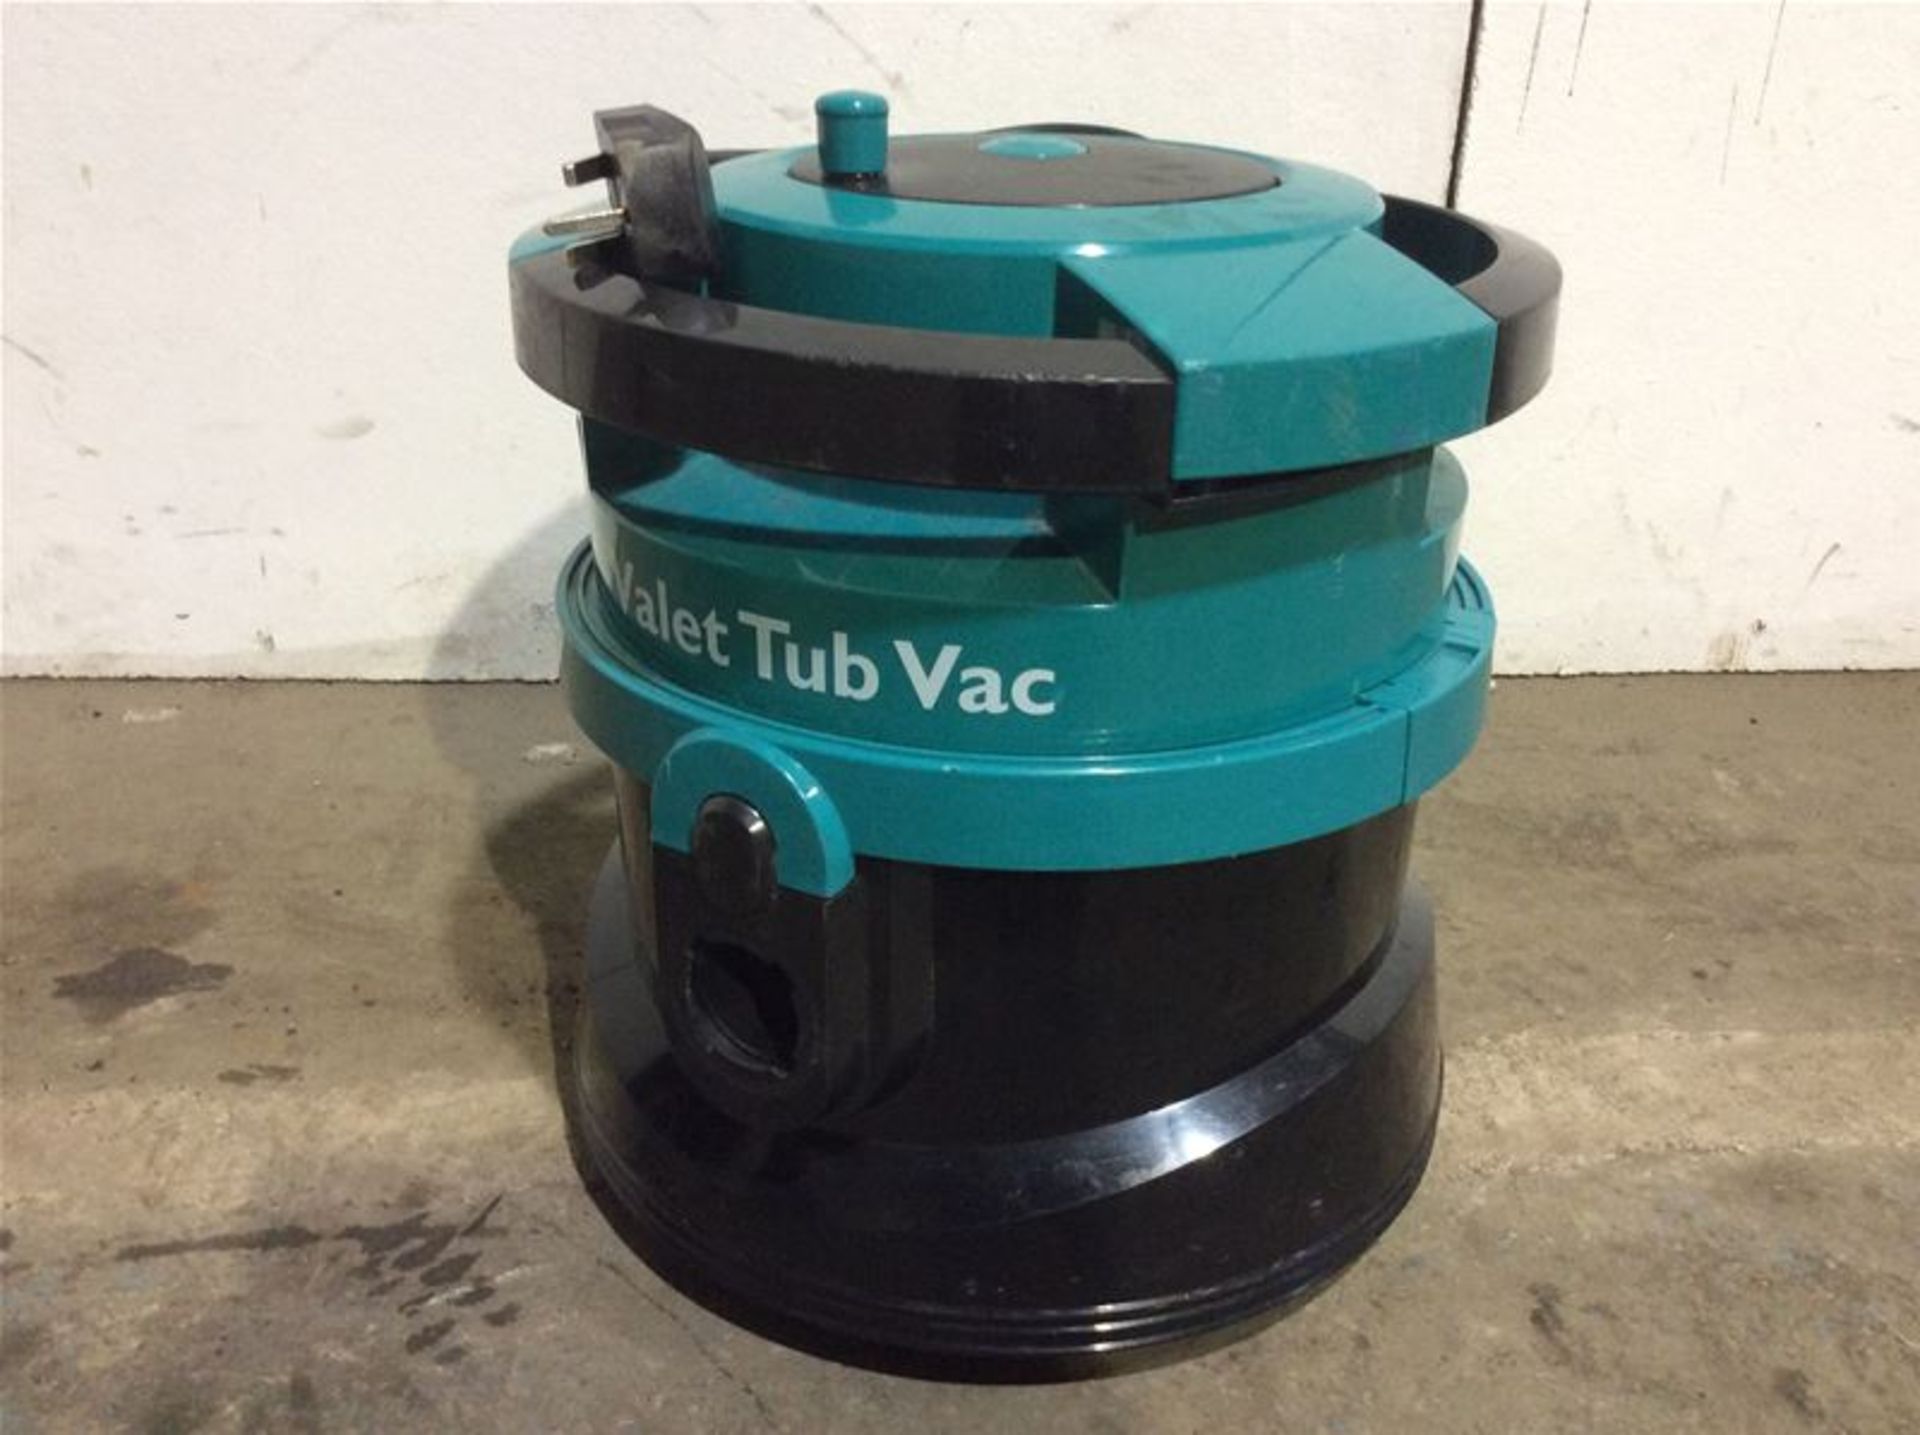 TRUVOX VTV VALET TUB VAC DRY VACUUM CLEANER -240V